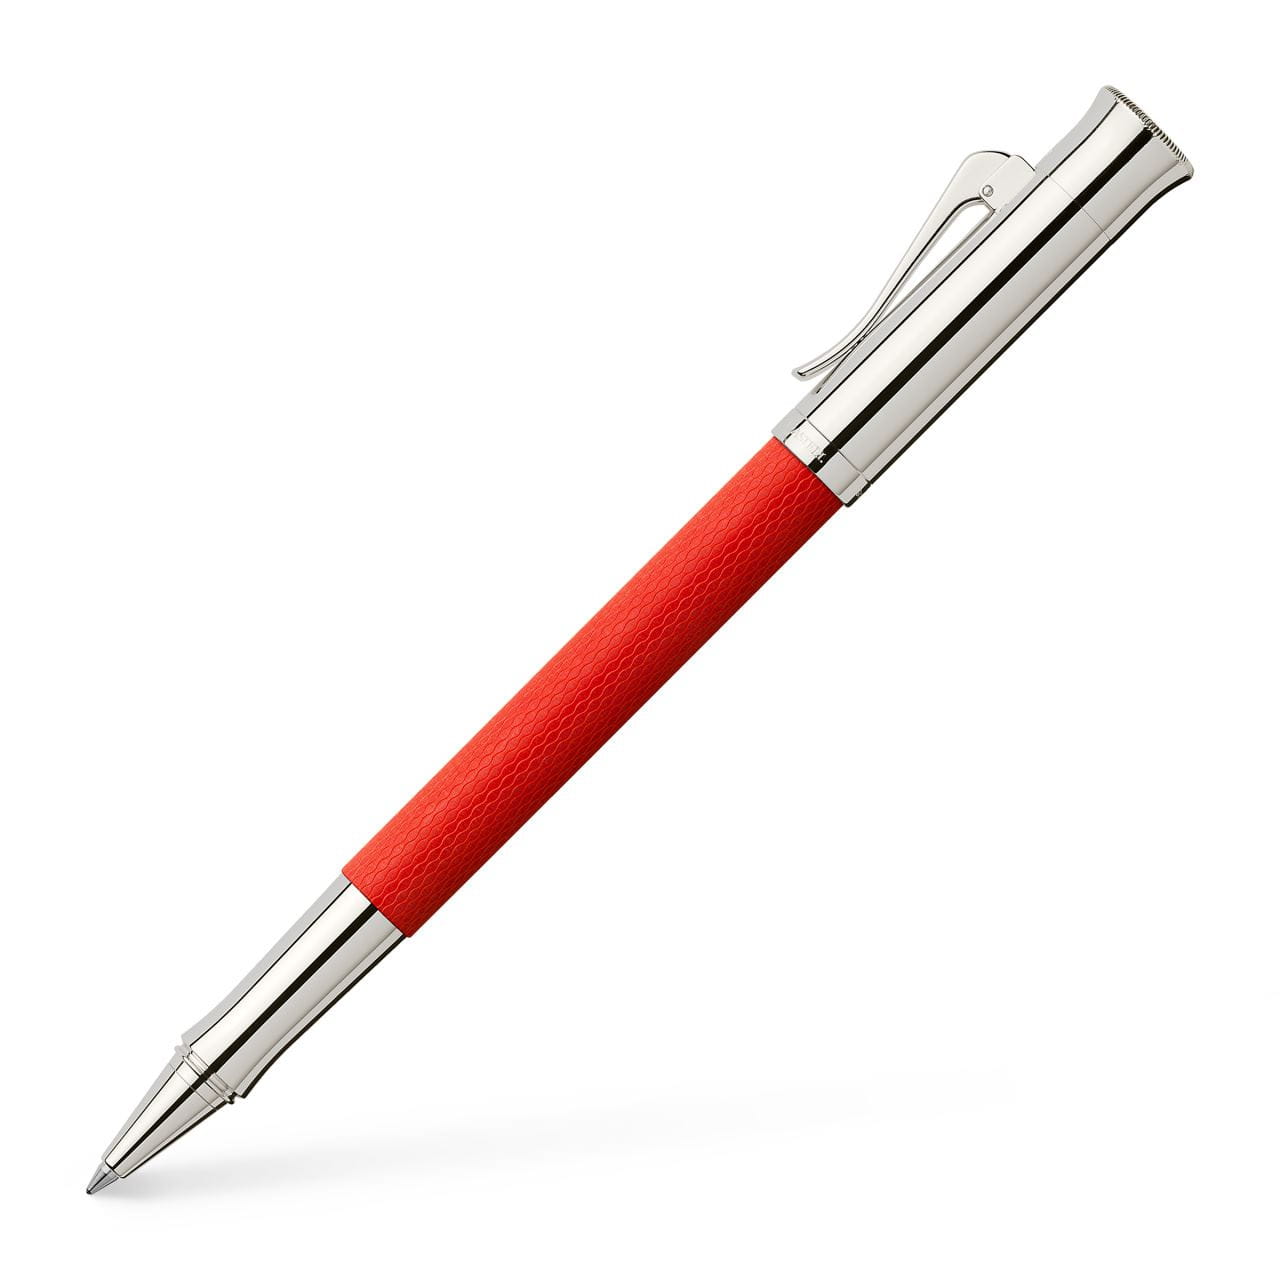 Graf-von-Faber-Castell - Rollerball pen Guilloche India Red